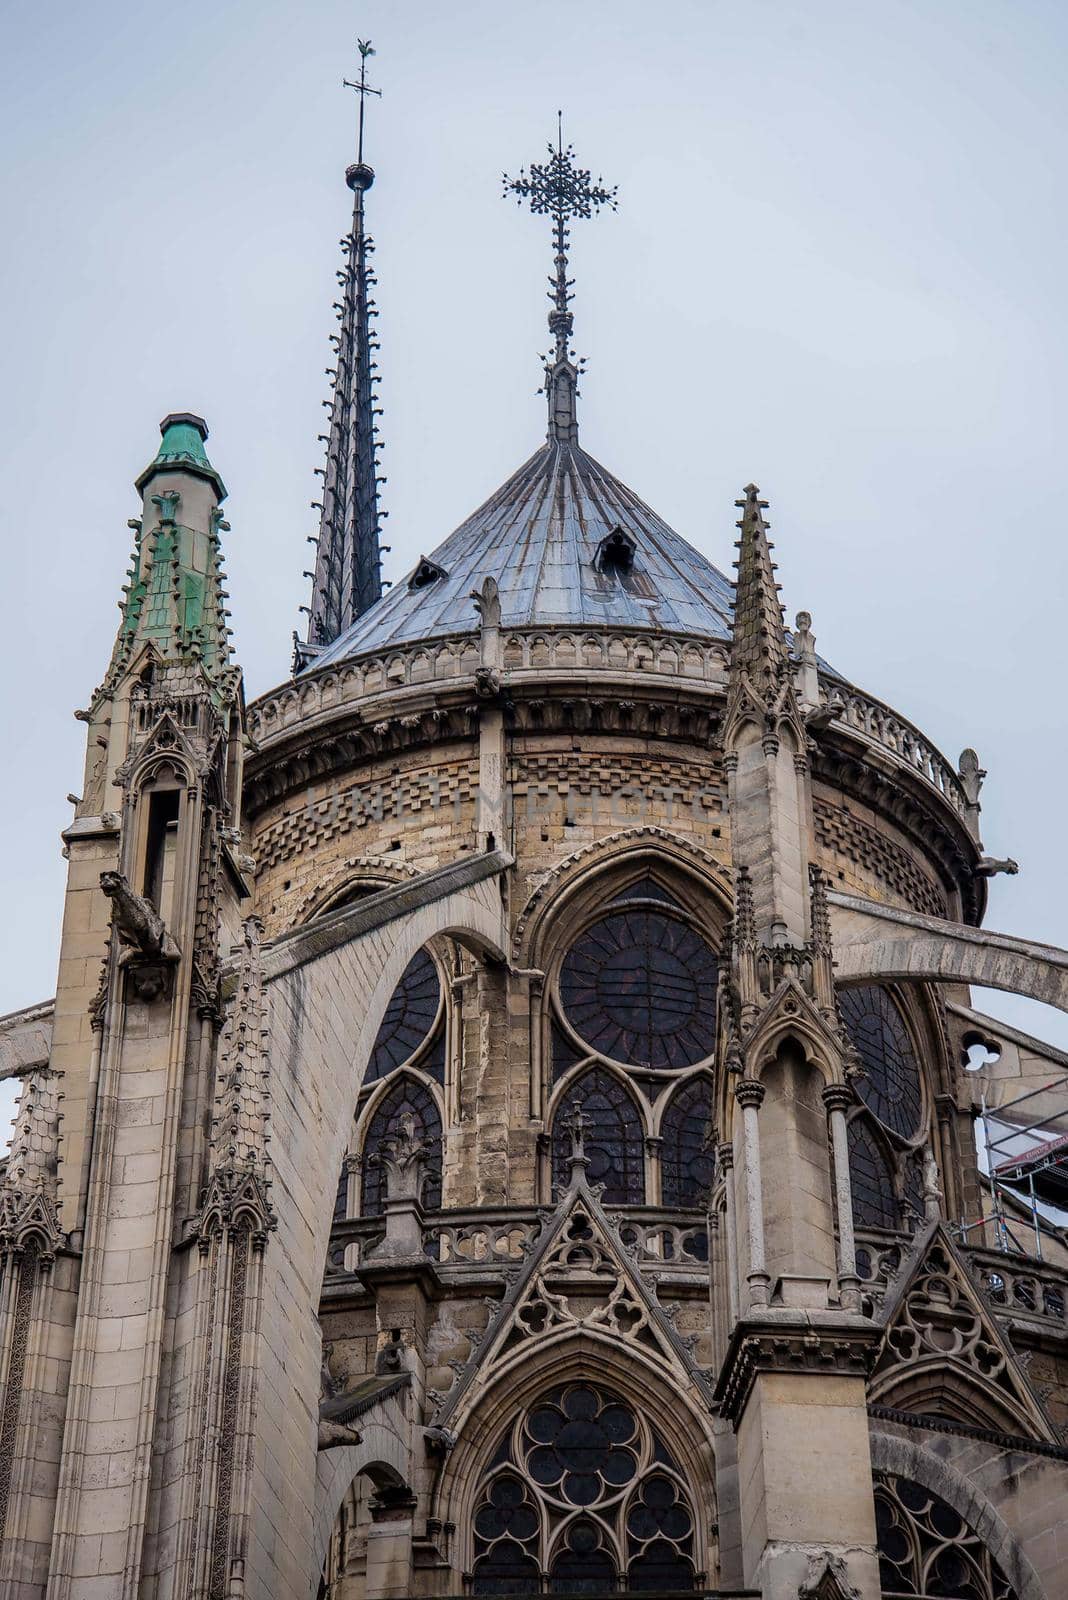 Paris, France - February 3, 2017: Detail close up view of the French Gothic architecture of the Notre Dame de Paris. Exterior view